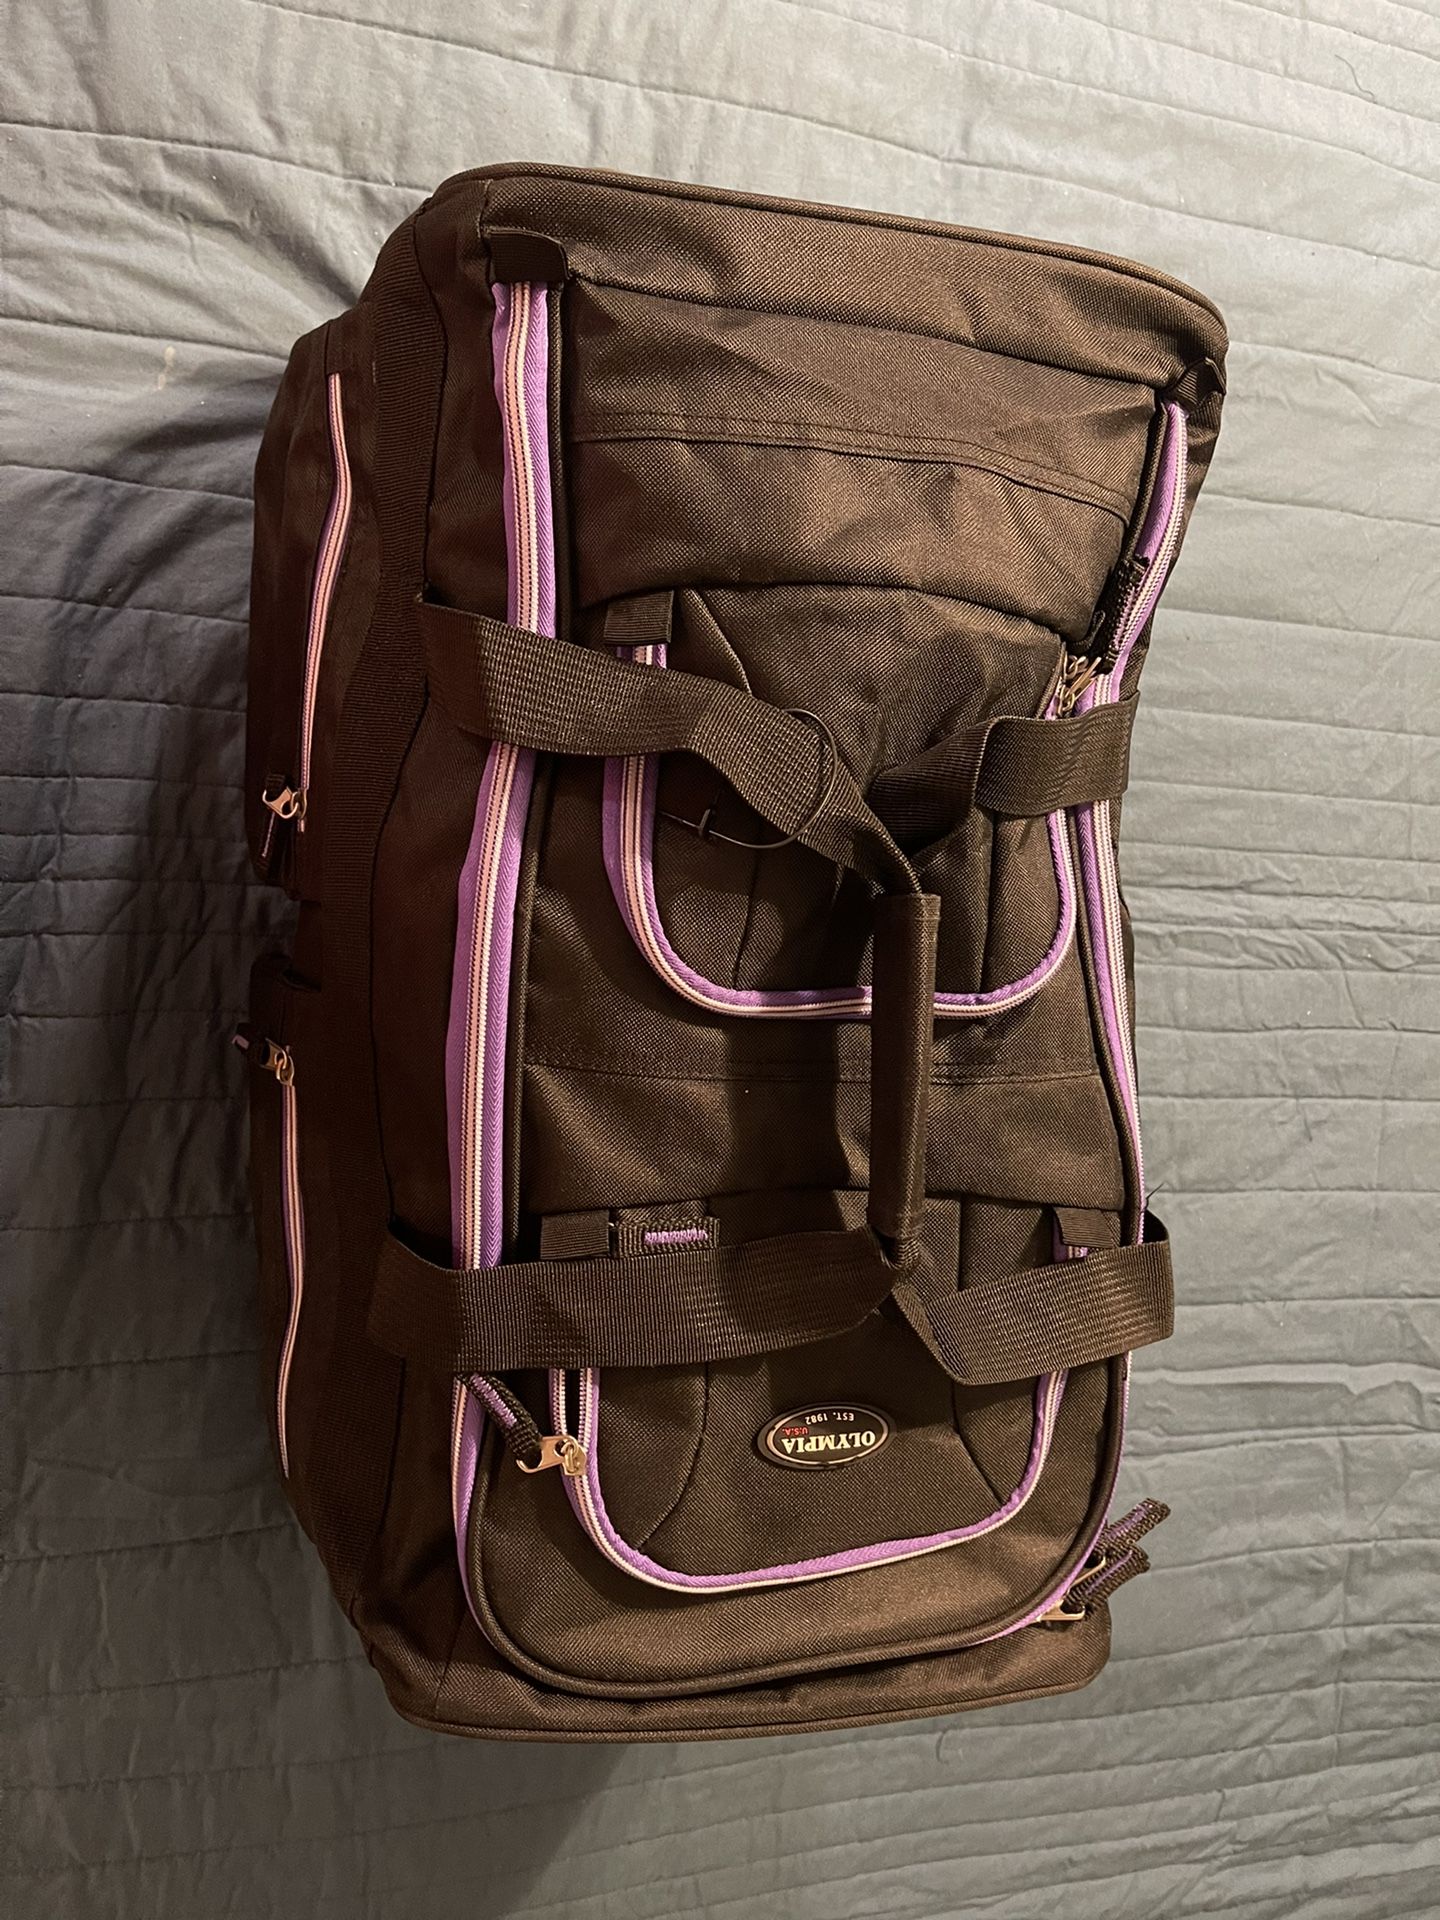 Olympia 8 Pocket  Bag, Black/Purple, 22 inch